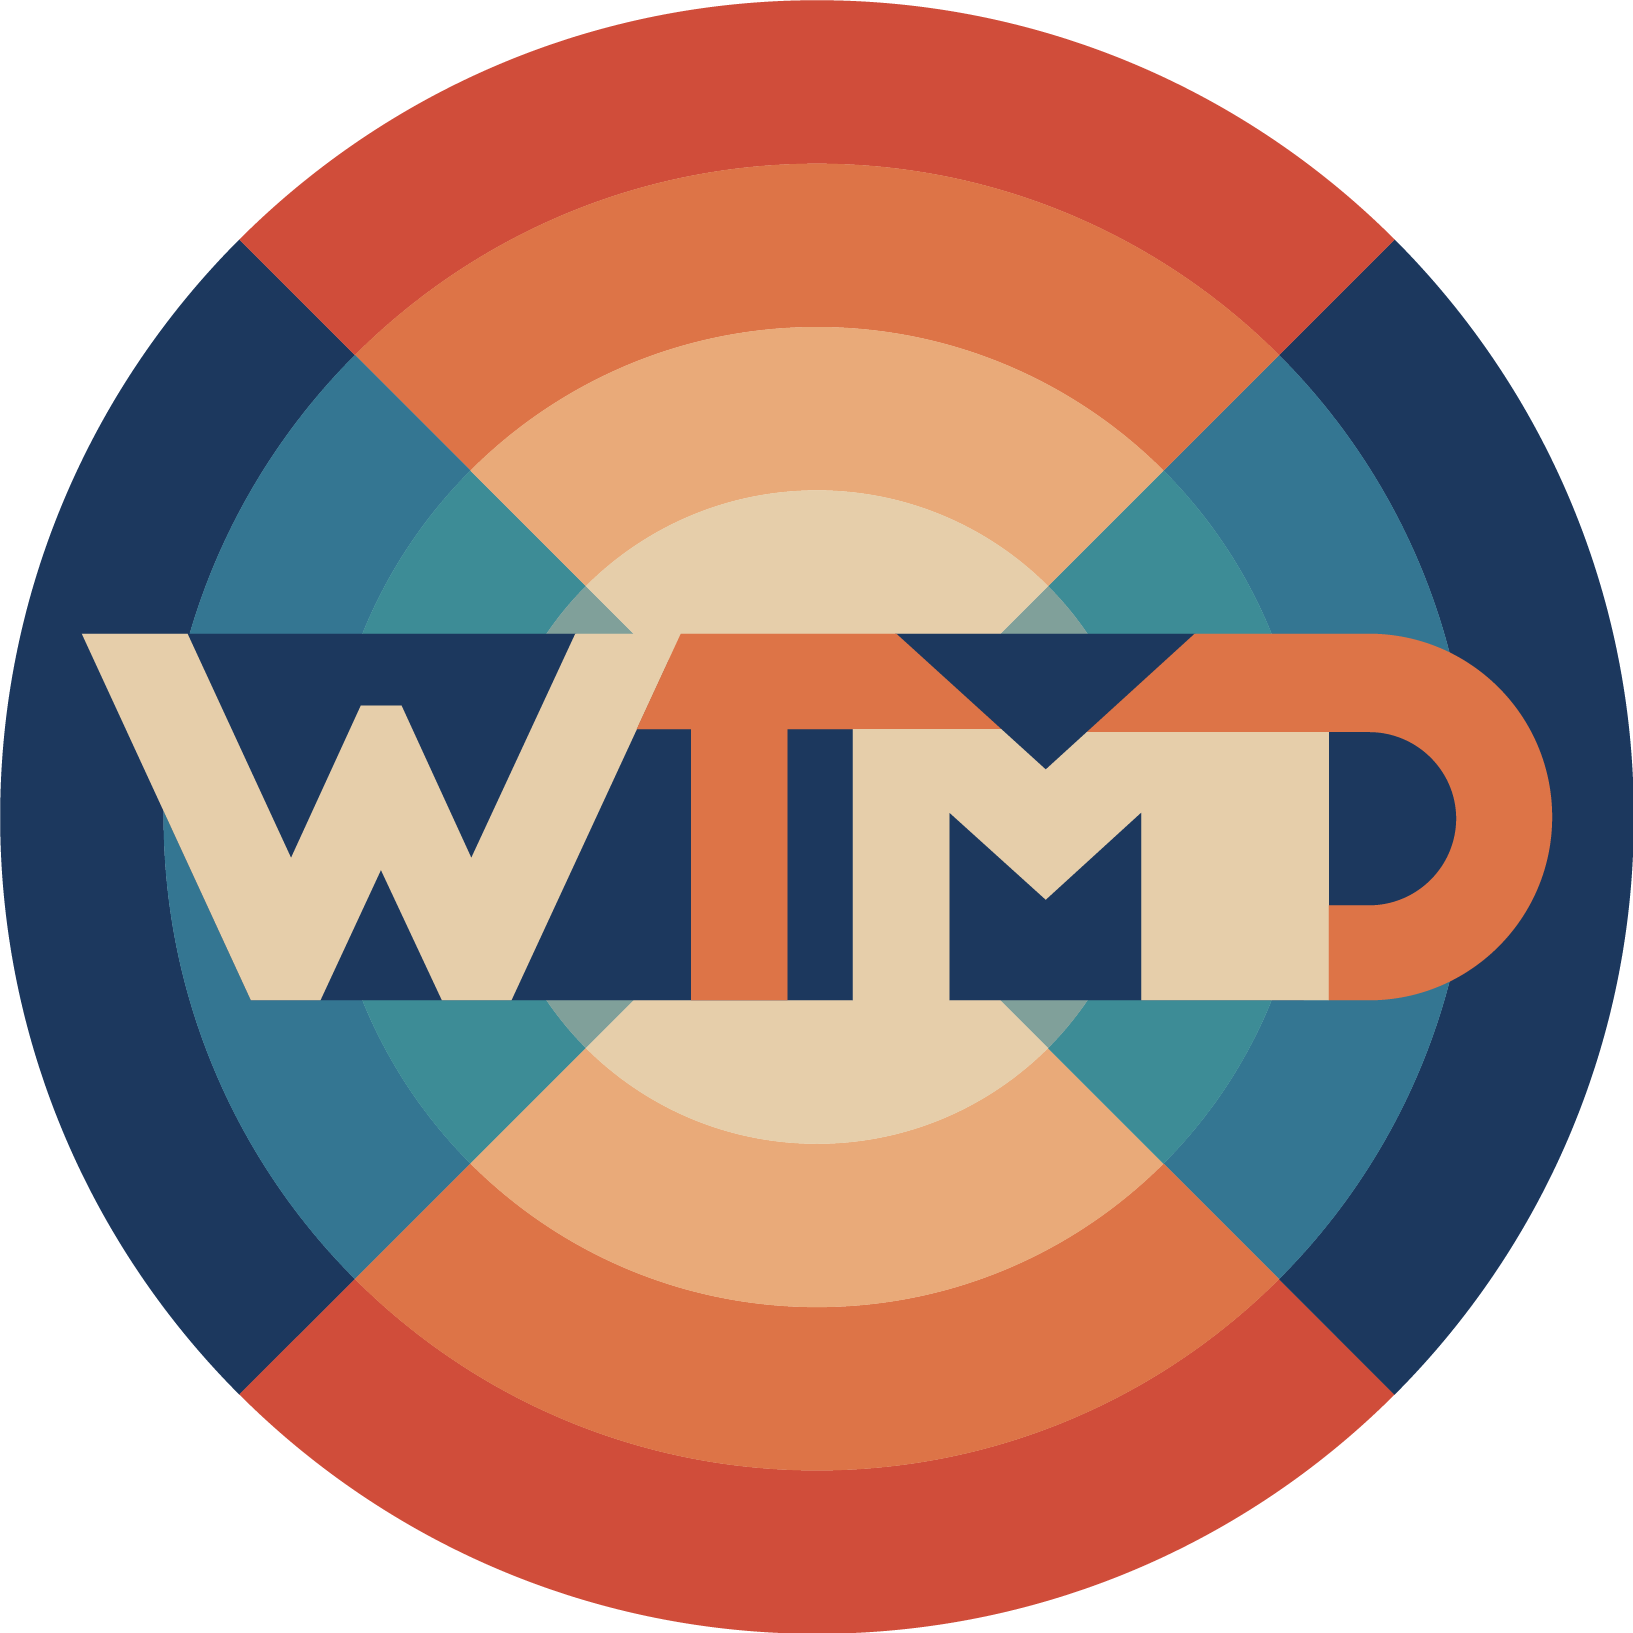 WTMD Logo